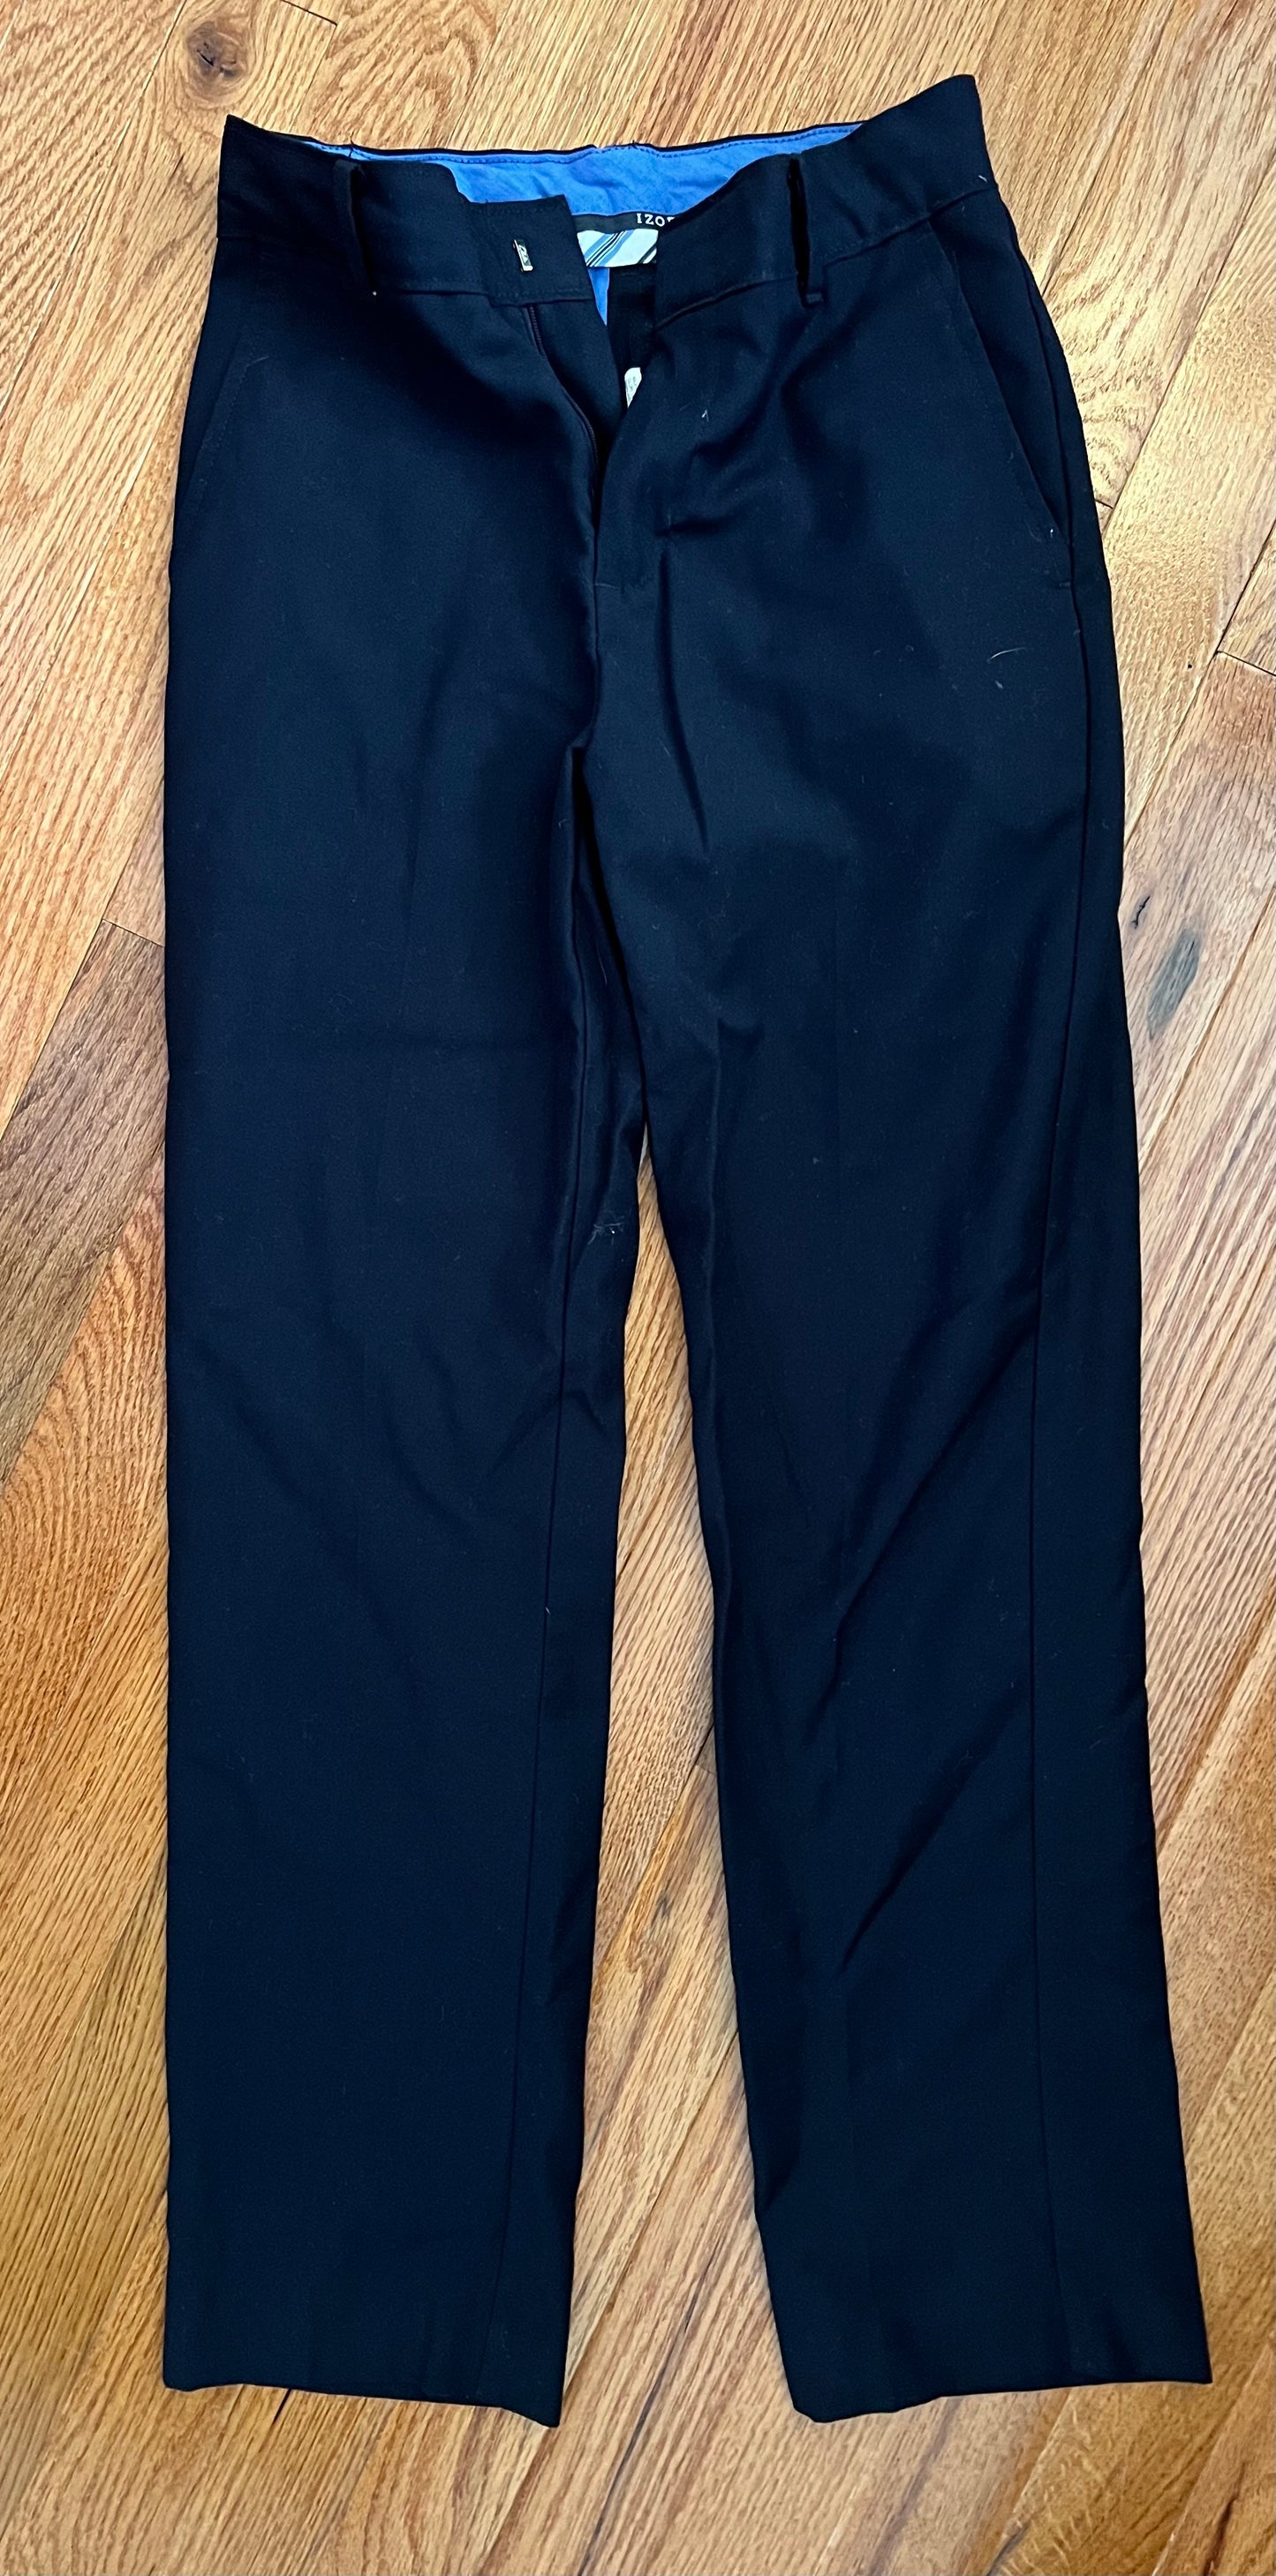 Navy dress pants- size 10 slim boys